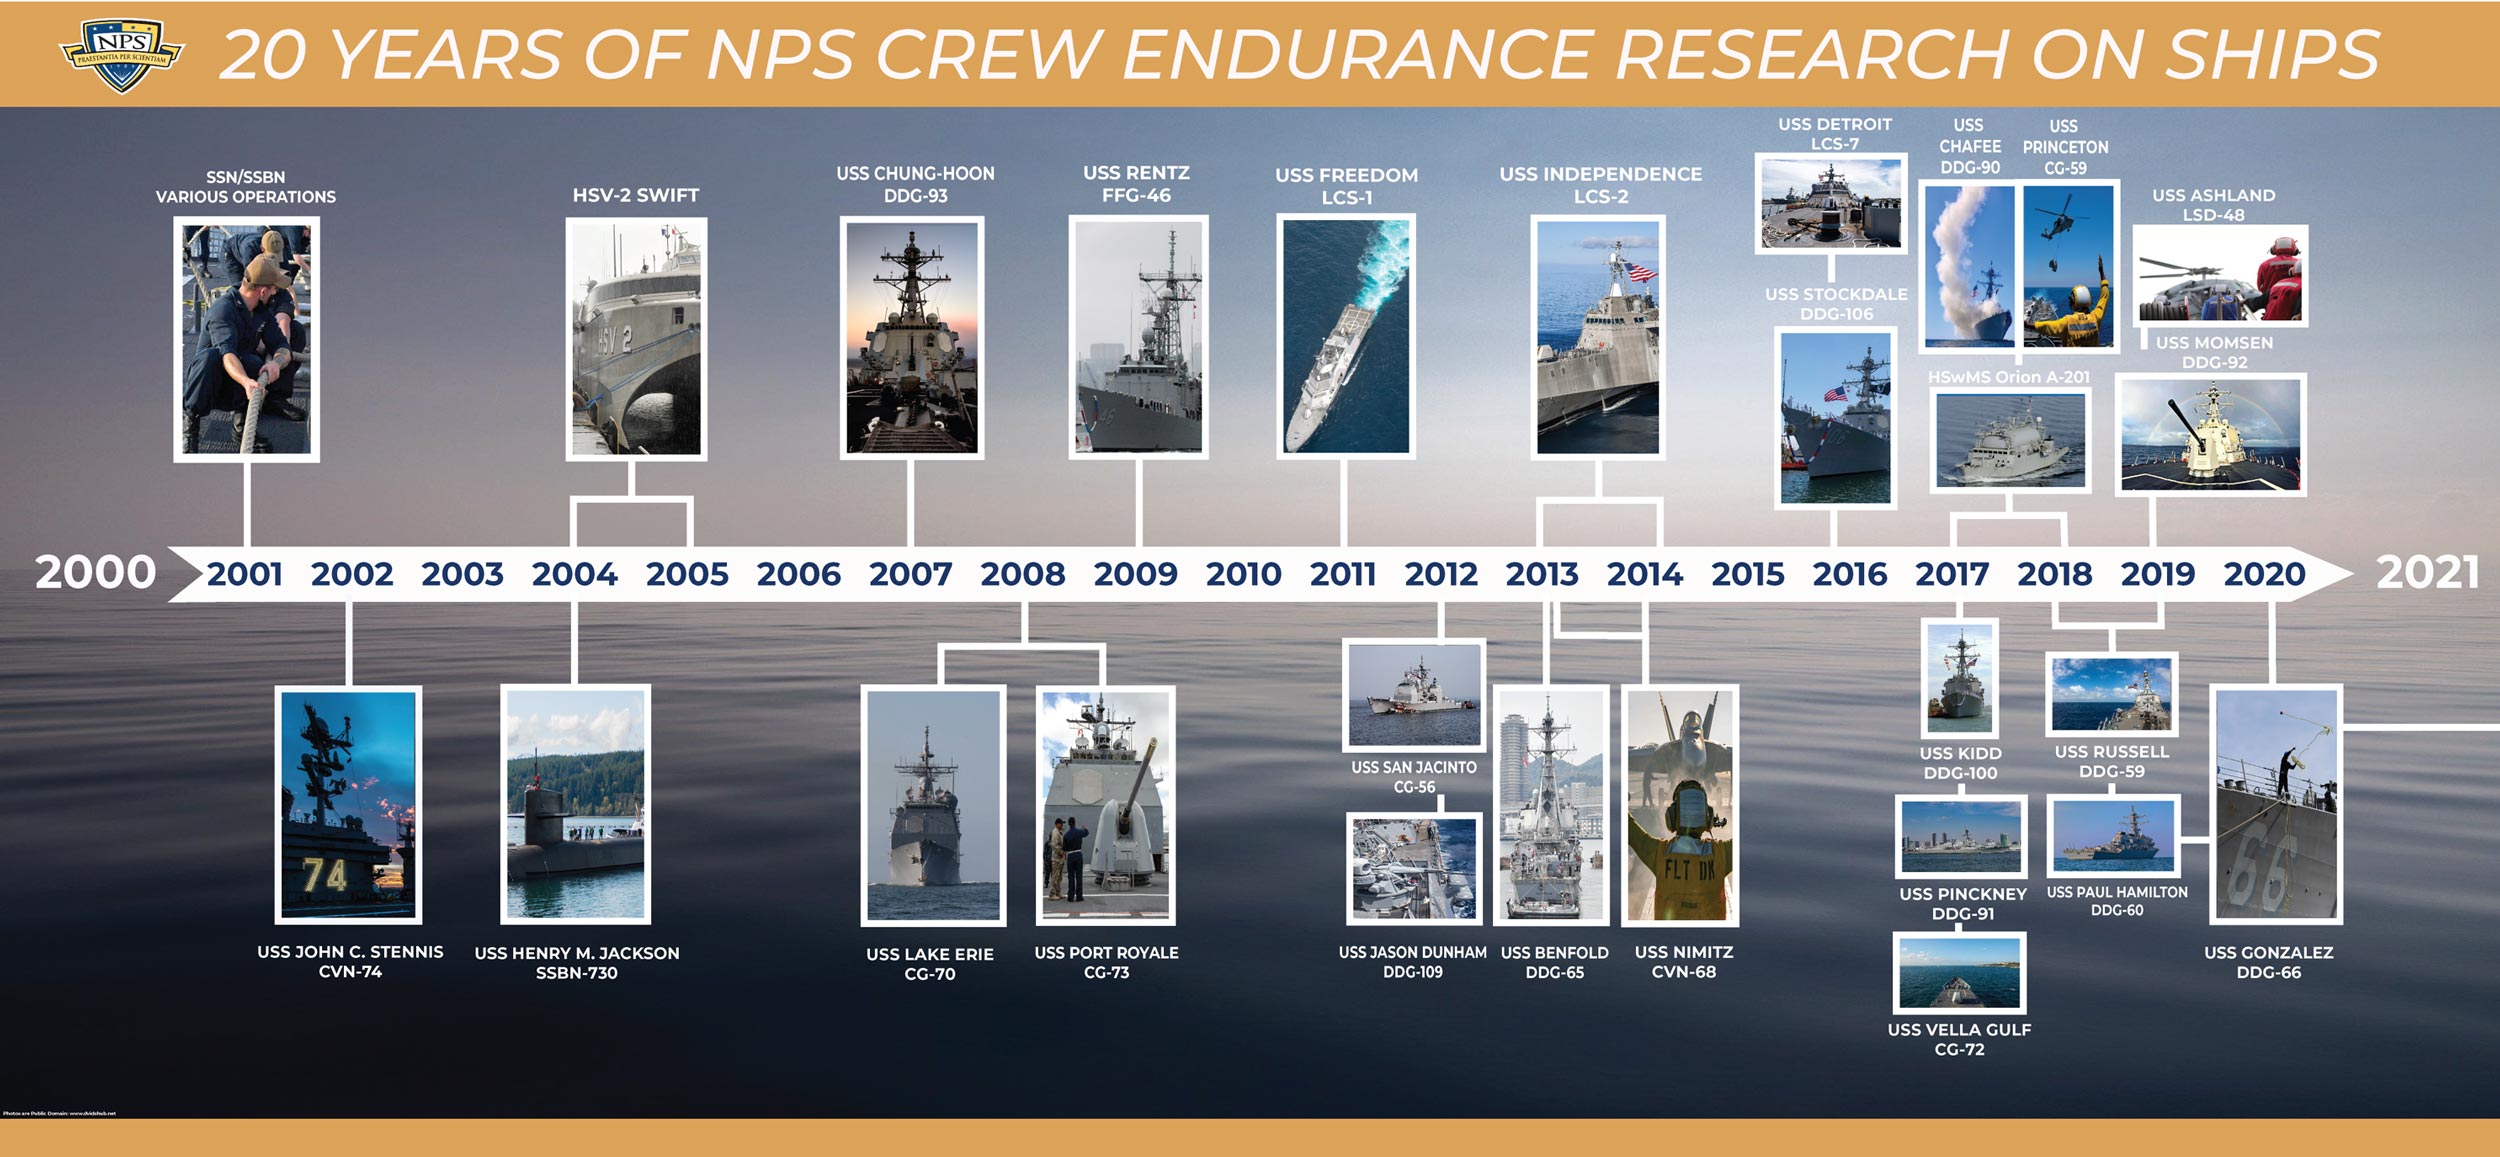 Naval Postgraduate School Crew Endurance Timeline